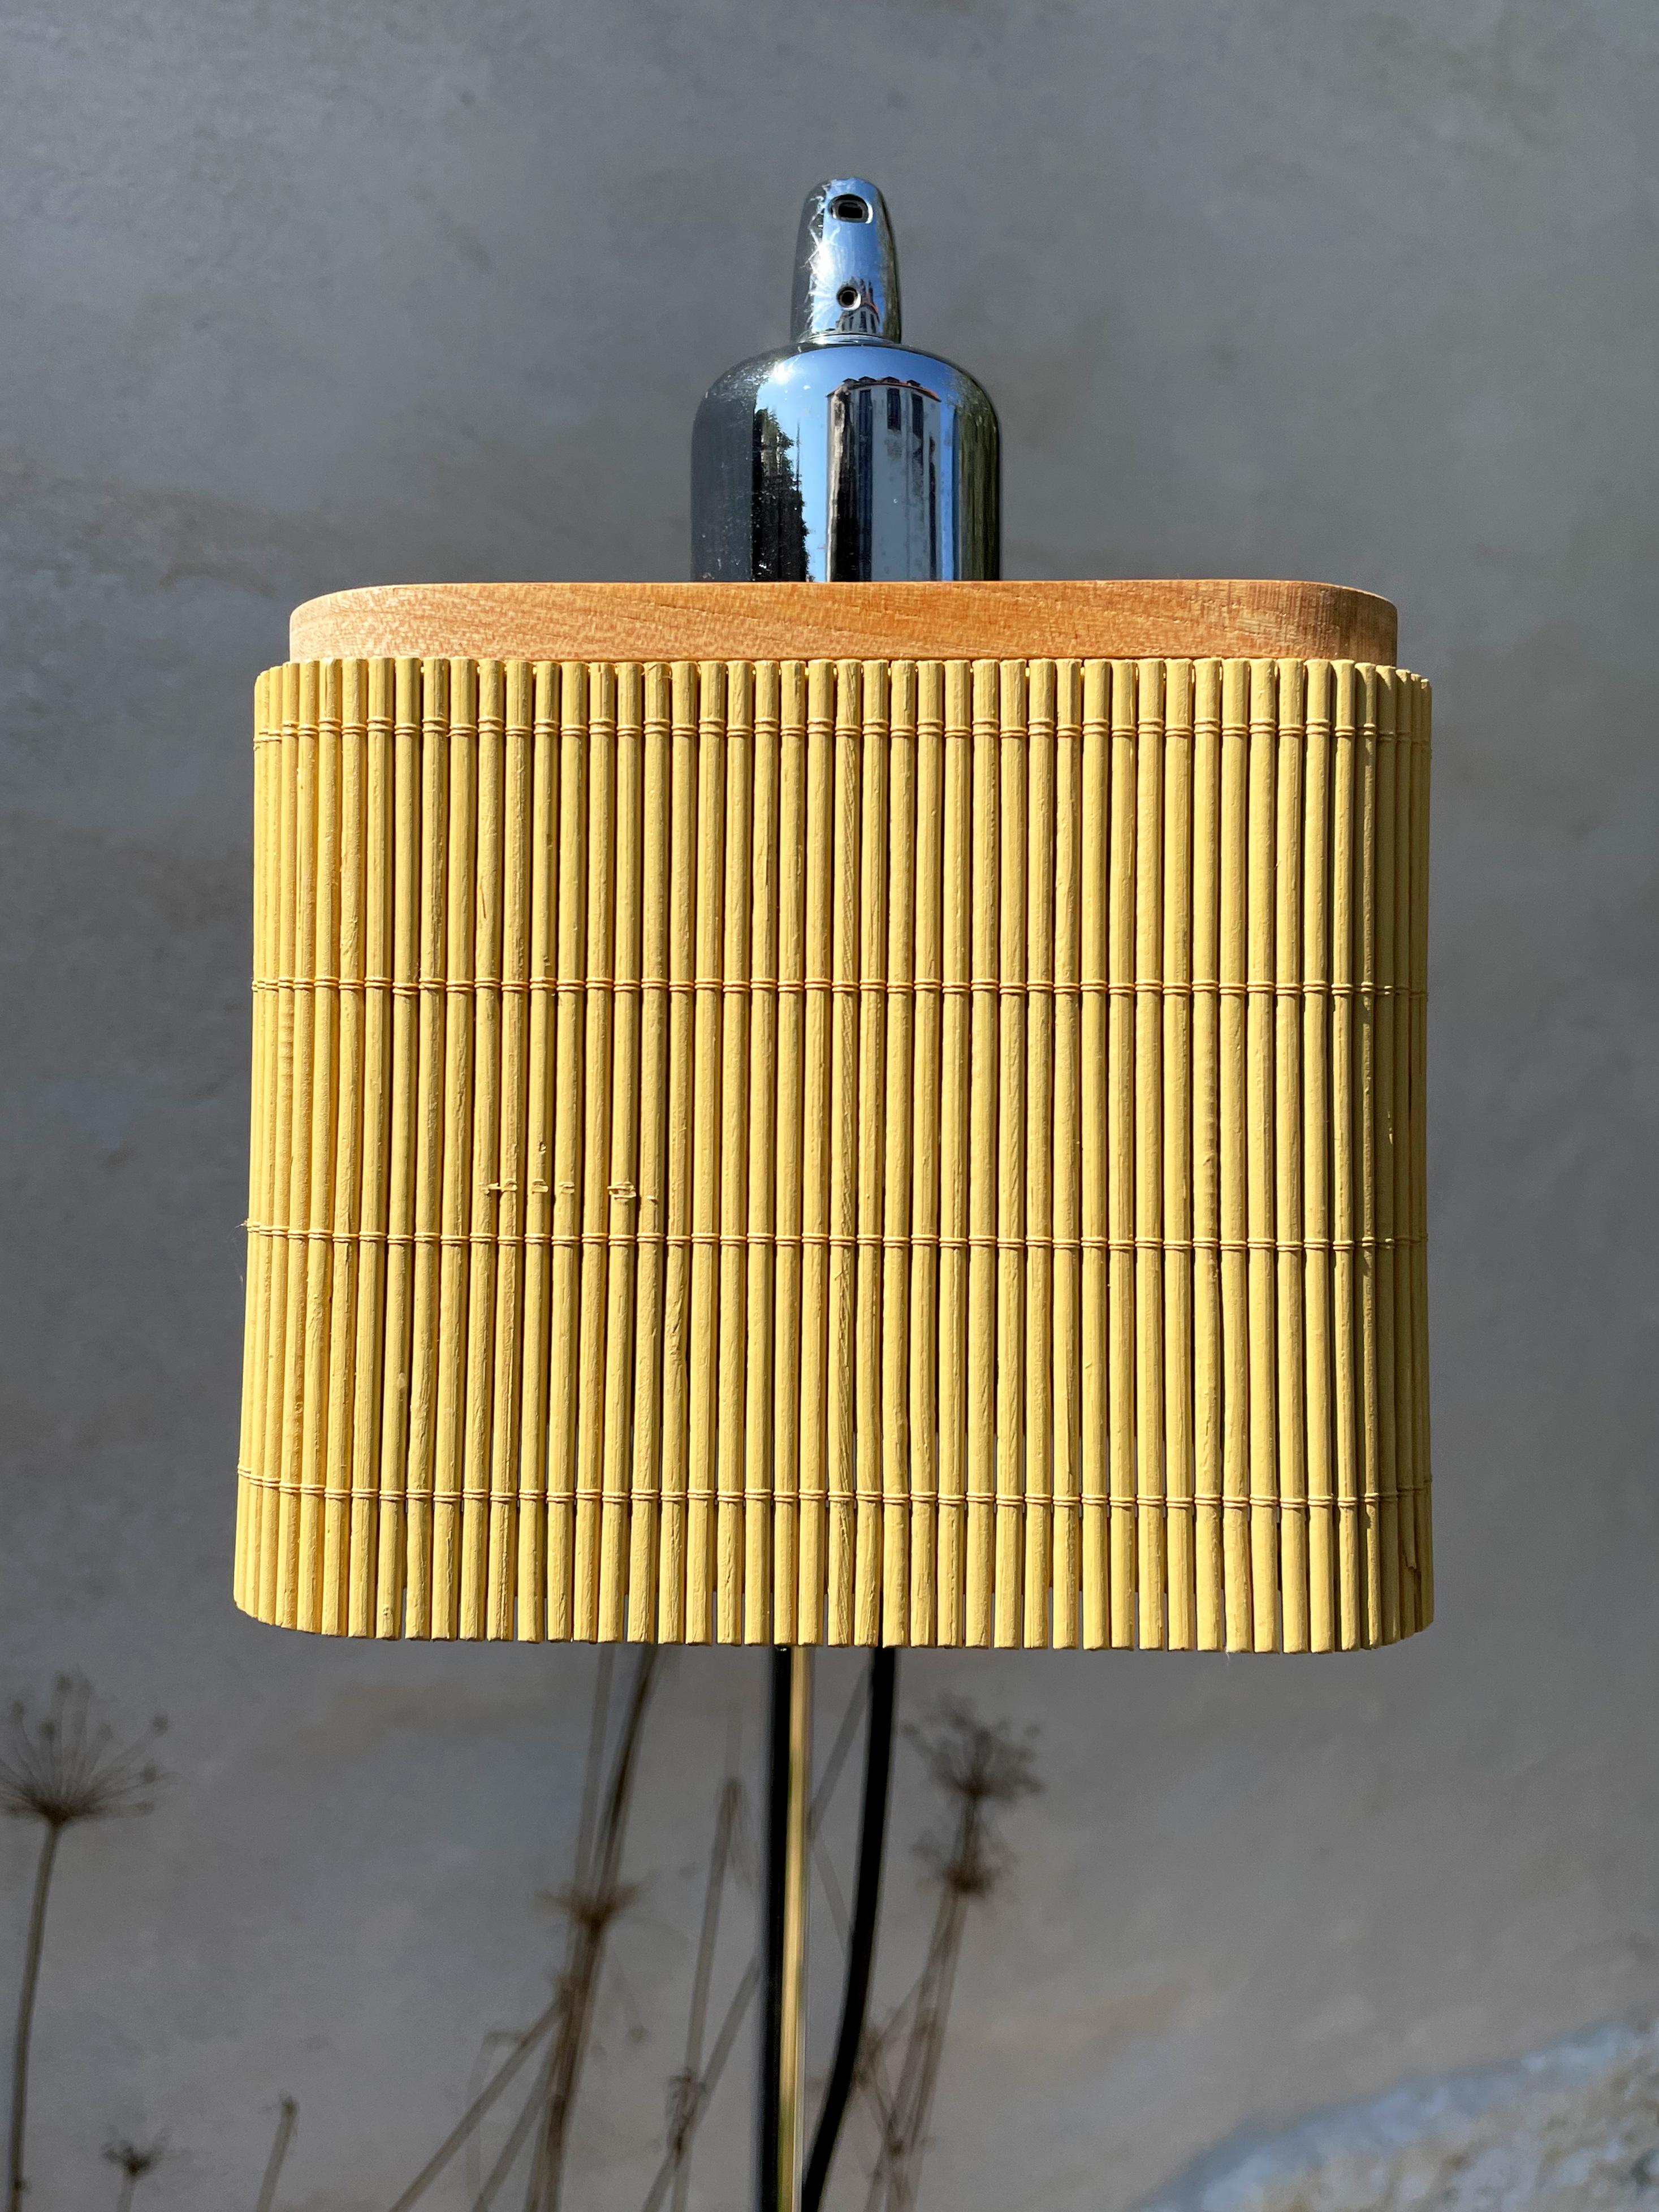 Adjustable Spanish Modernist Floor Lamp, Chrome, Wood, Rattan, 2010s For Sale 3